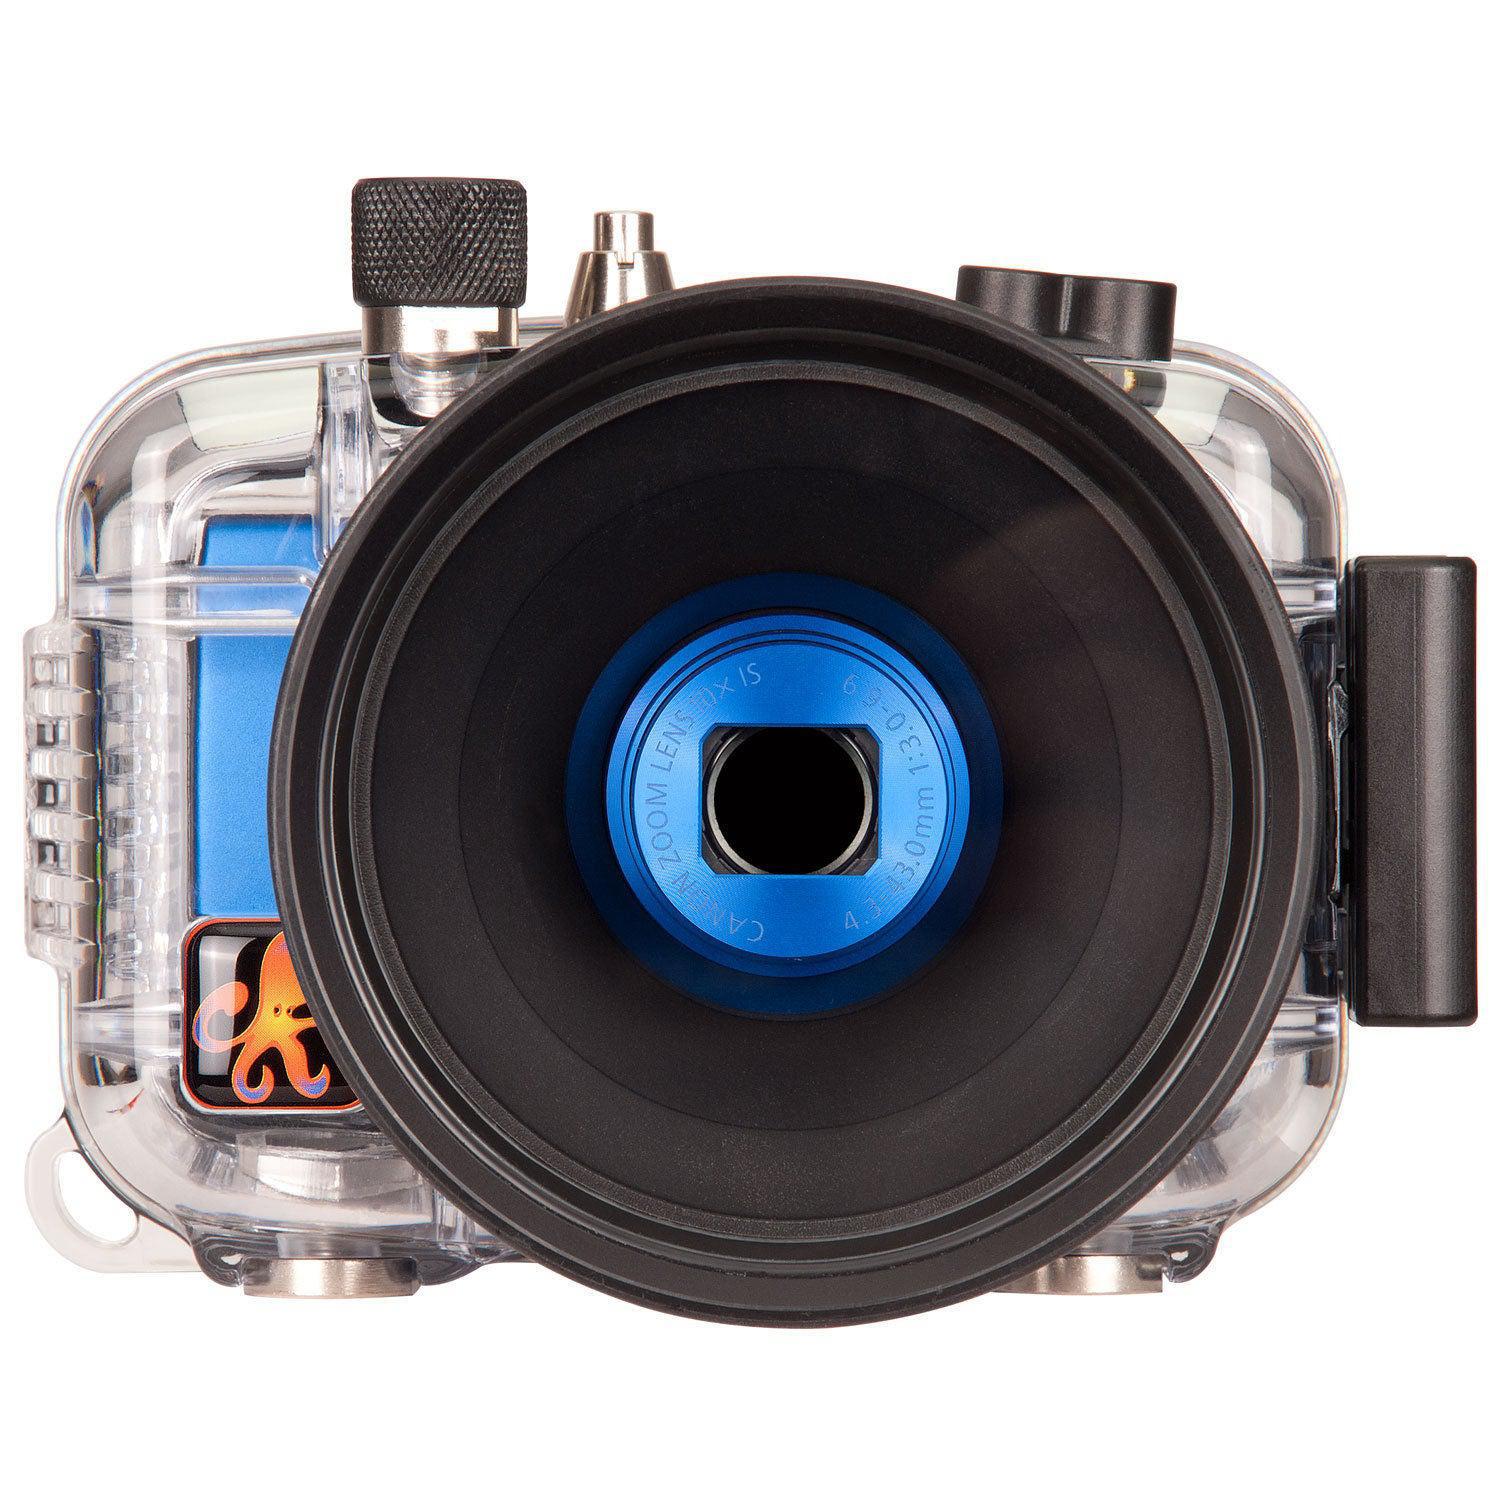 Ikelite Underwater Camera Housing for Canon PowerShot ELPH 150 HS, IXUS 155 HS Digital Cameras-